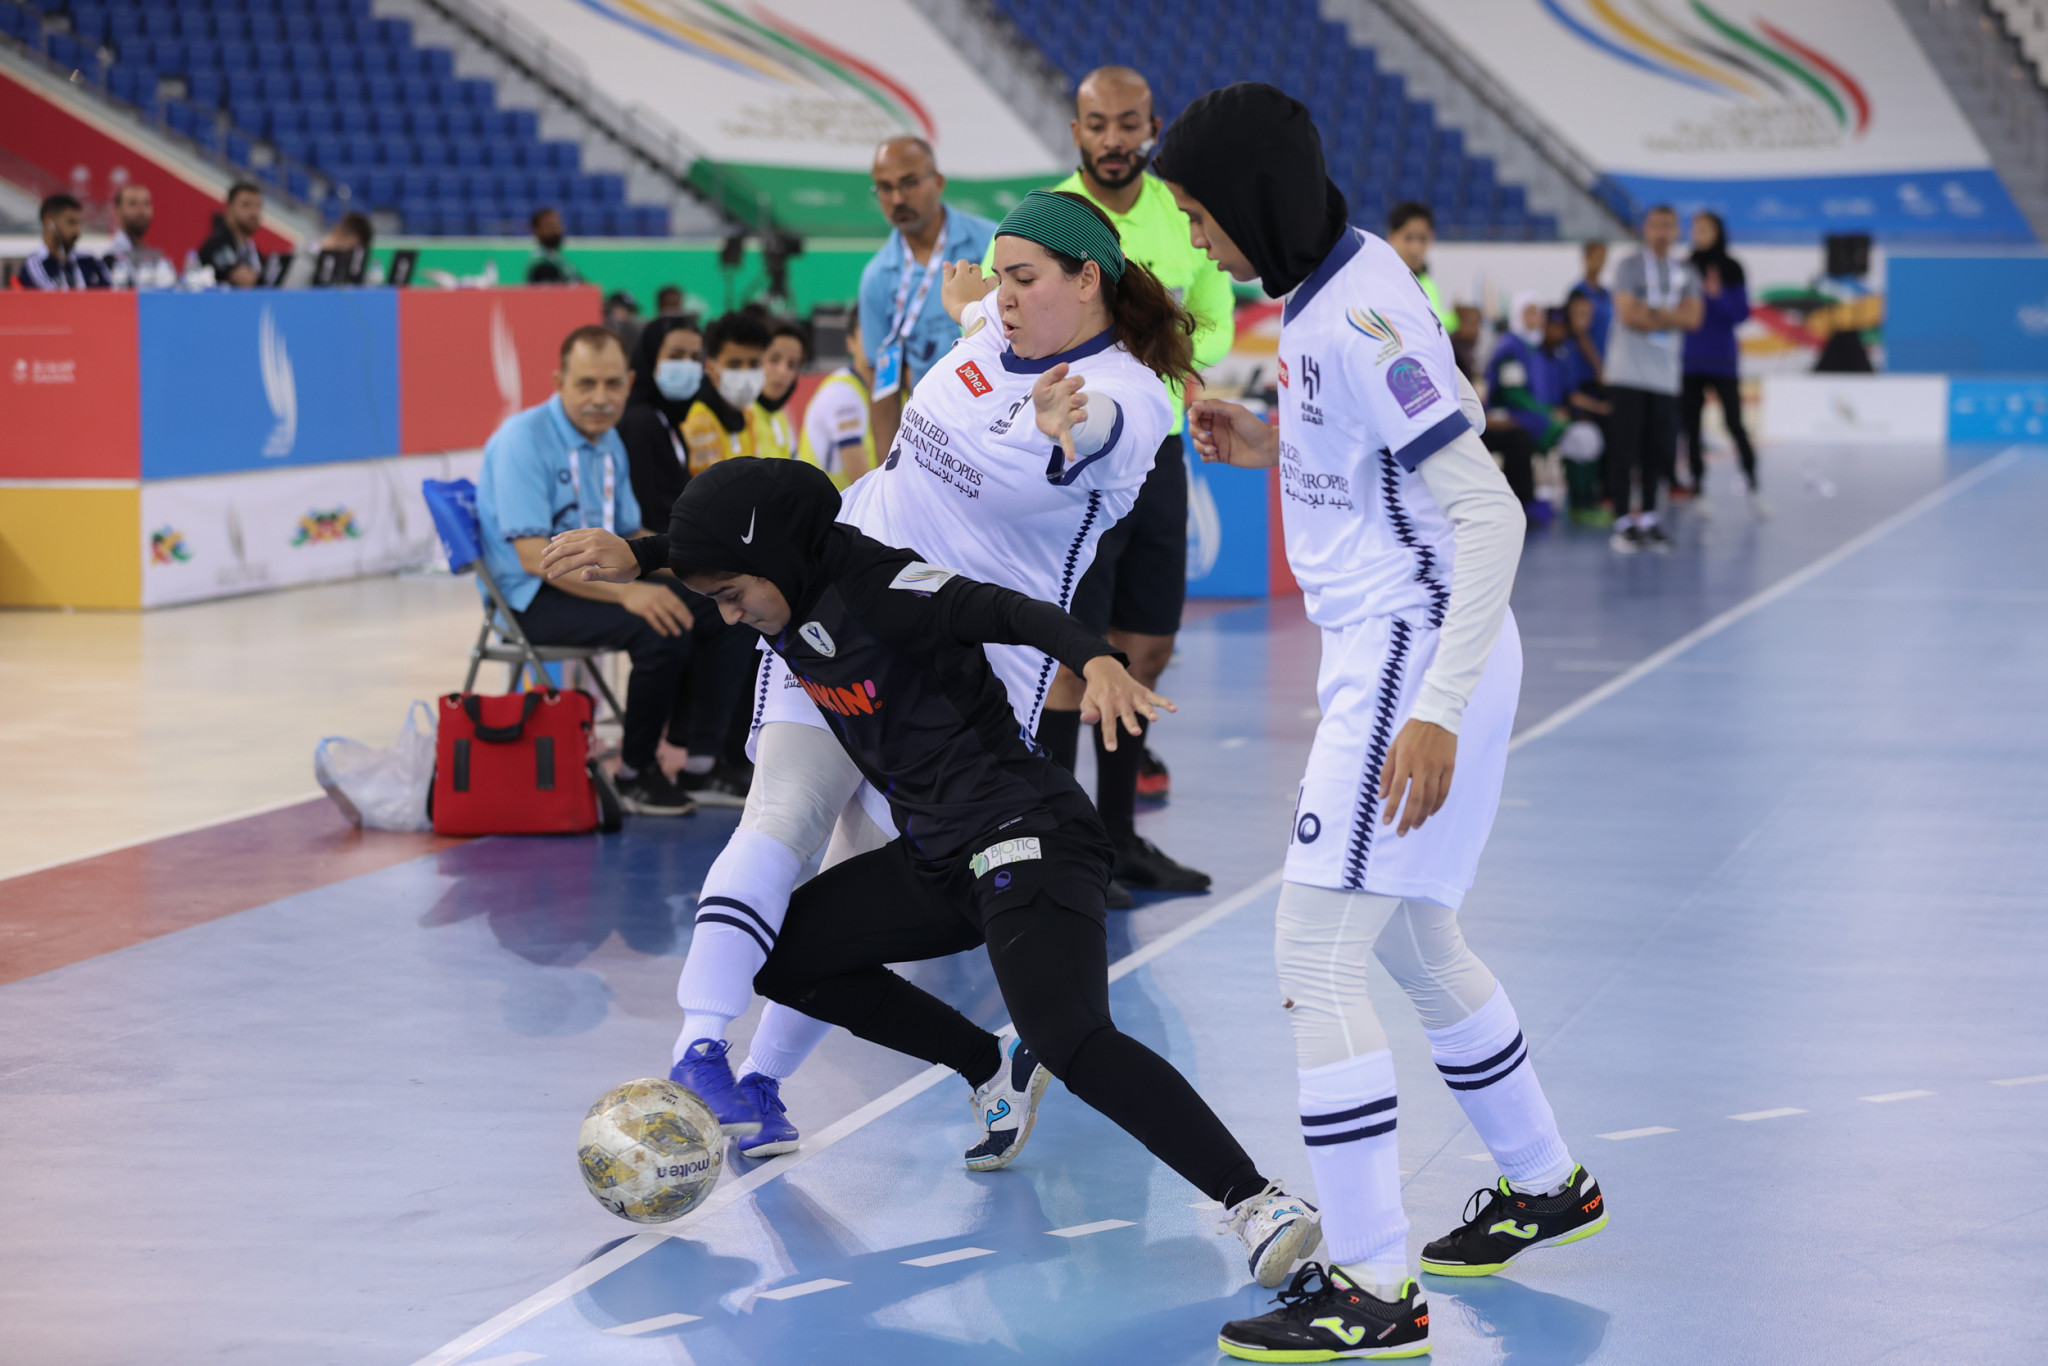 Al-Hilal and Al-Yamamah battled for gold in the women's futsal ©Saudi Games